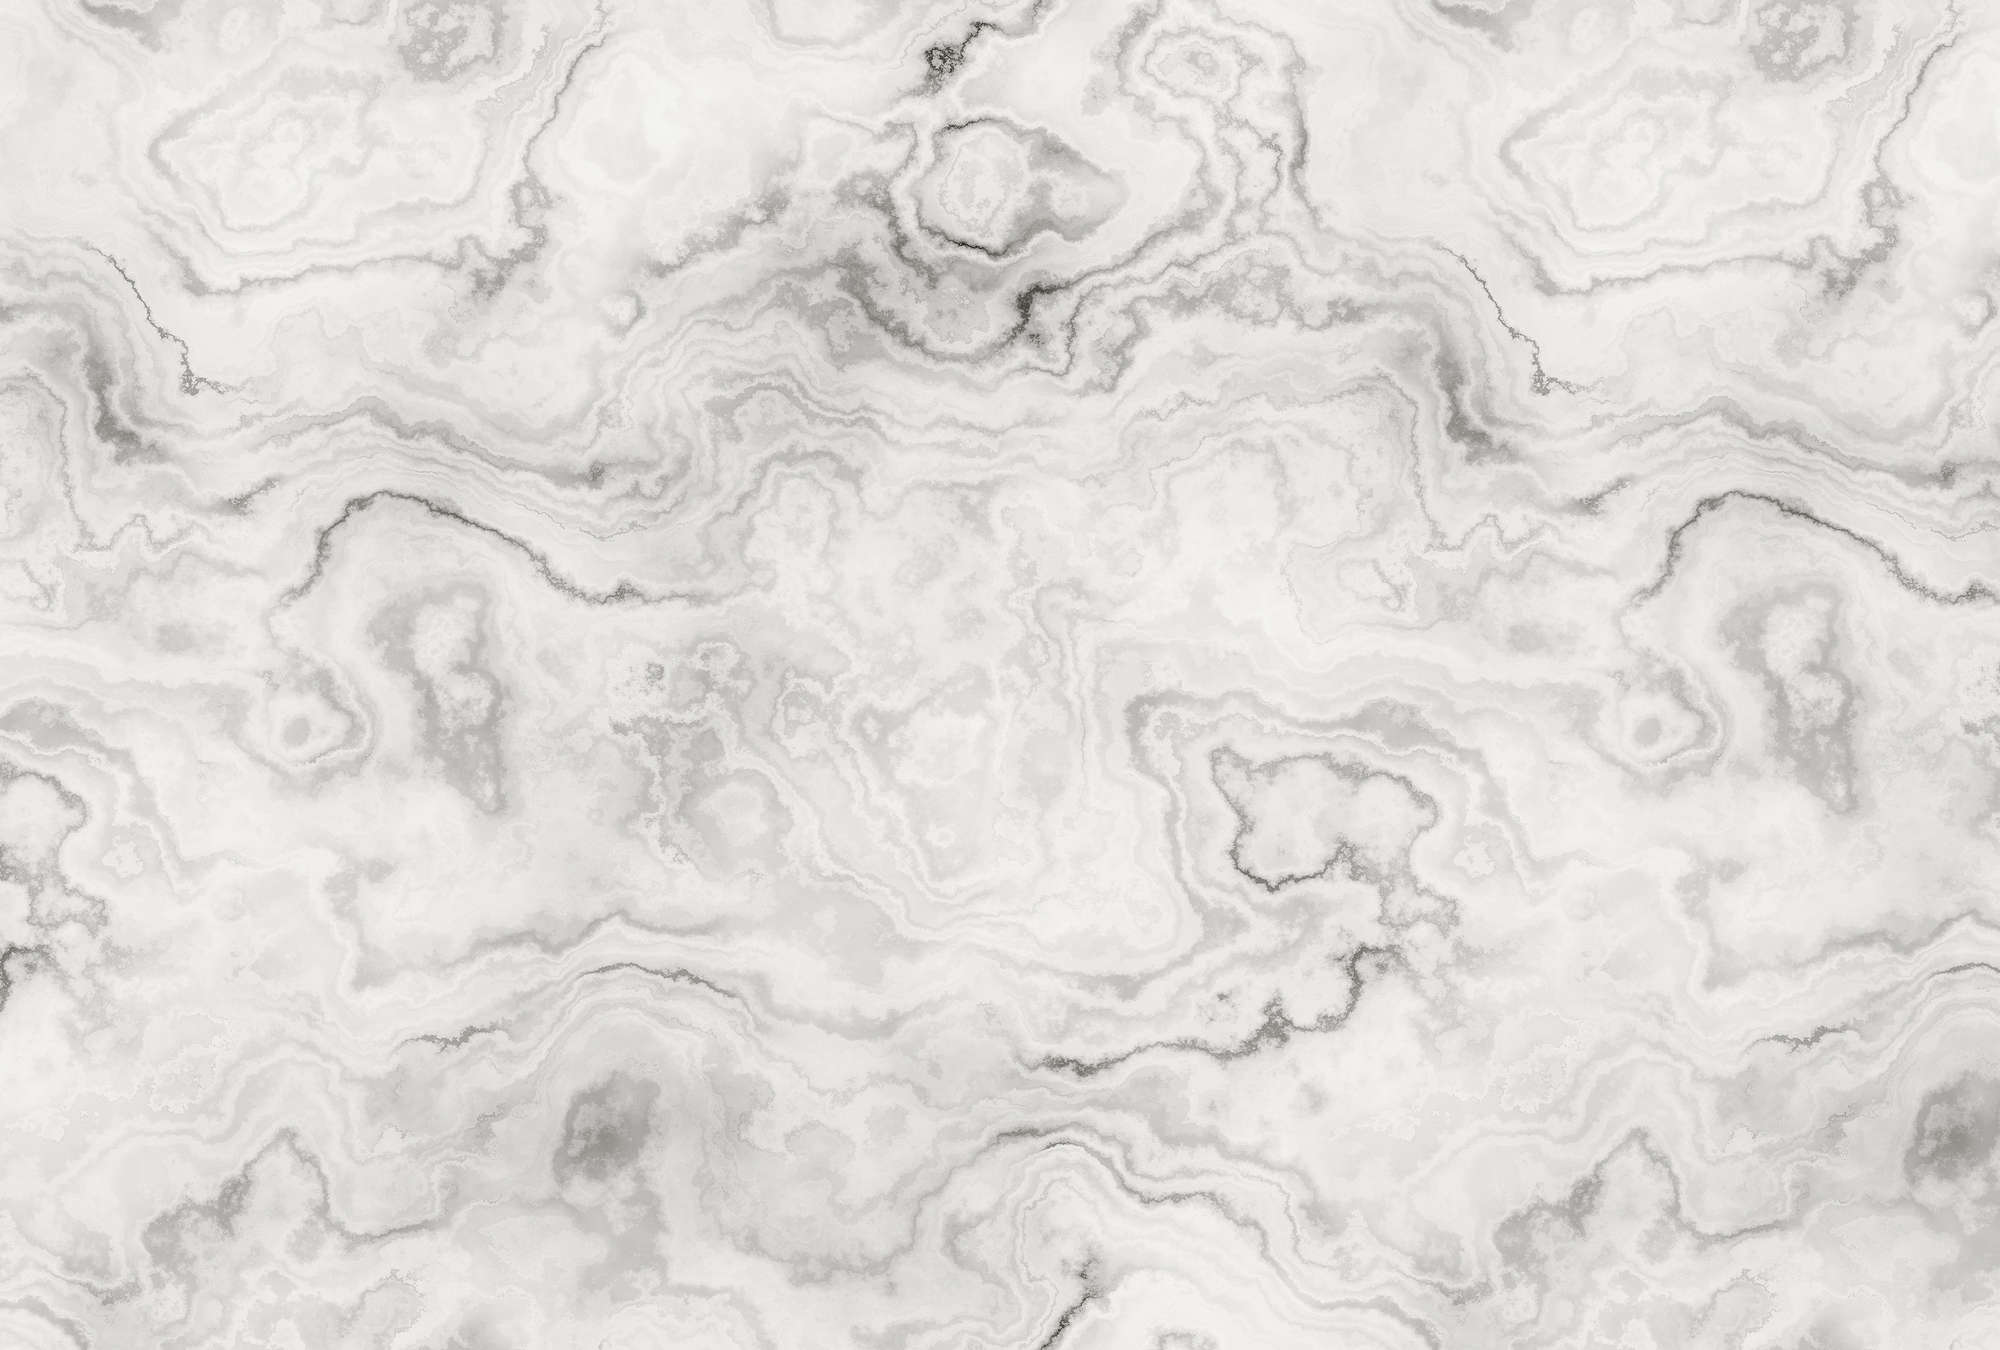             Carrara 1 - Elegante papel pintado efecto mármol - gris, blanco | nácar liso
        